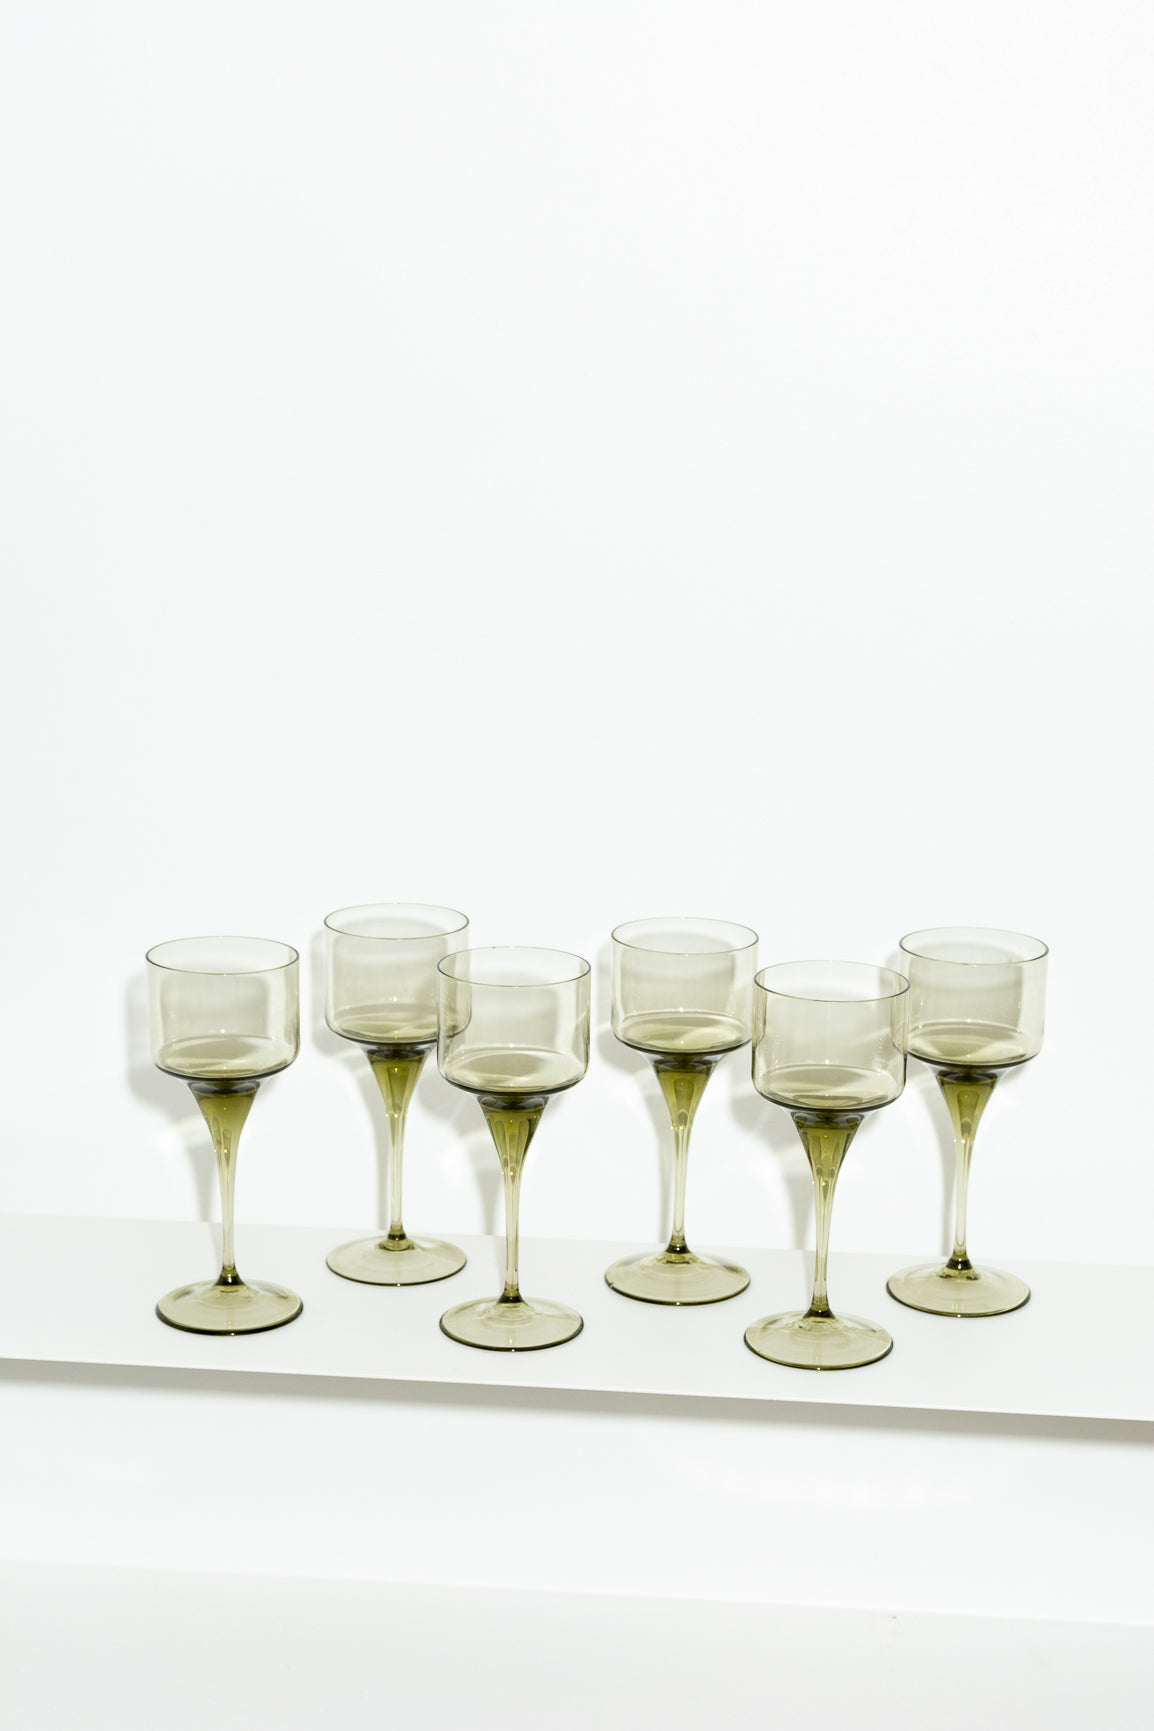 Green glass wine glasses